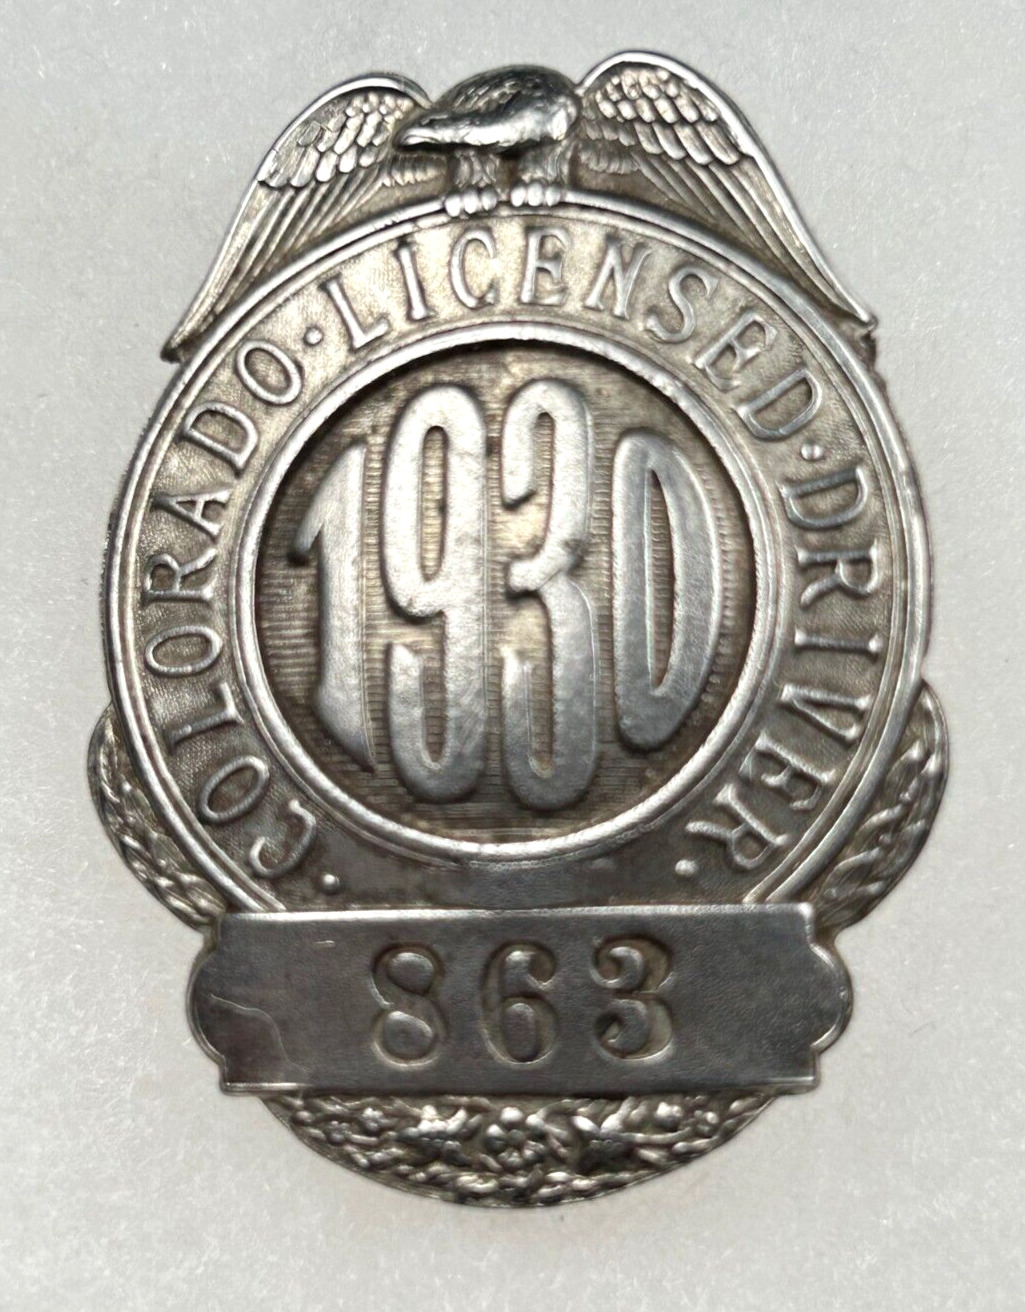 1930 Colorado Chauffeur Badge #863